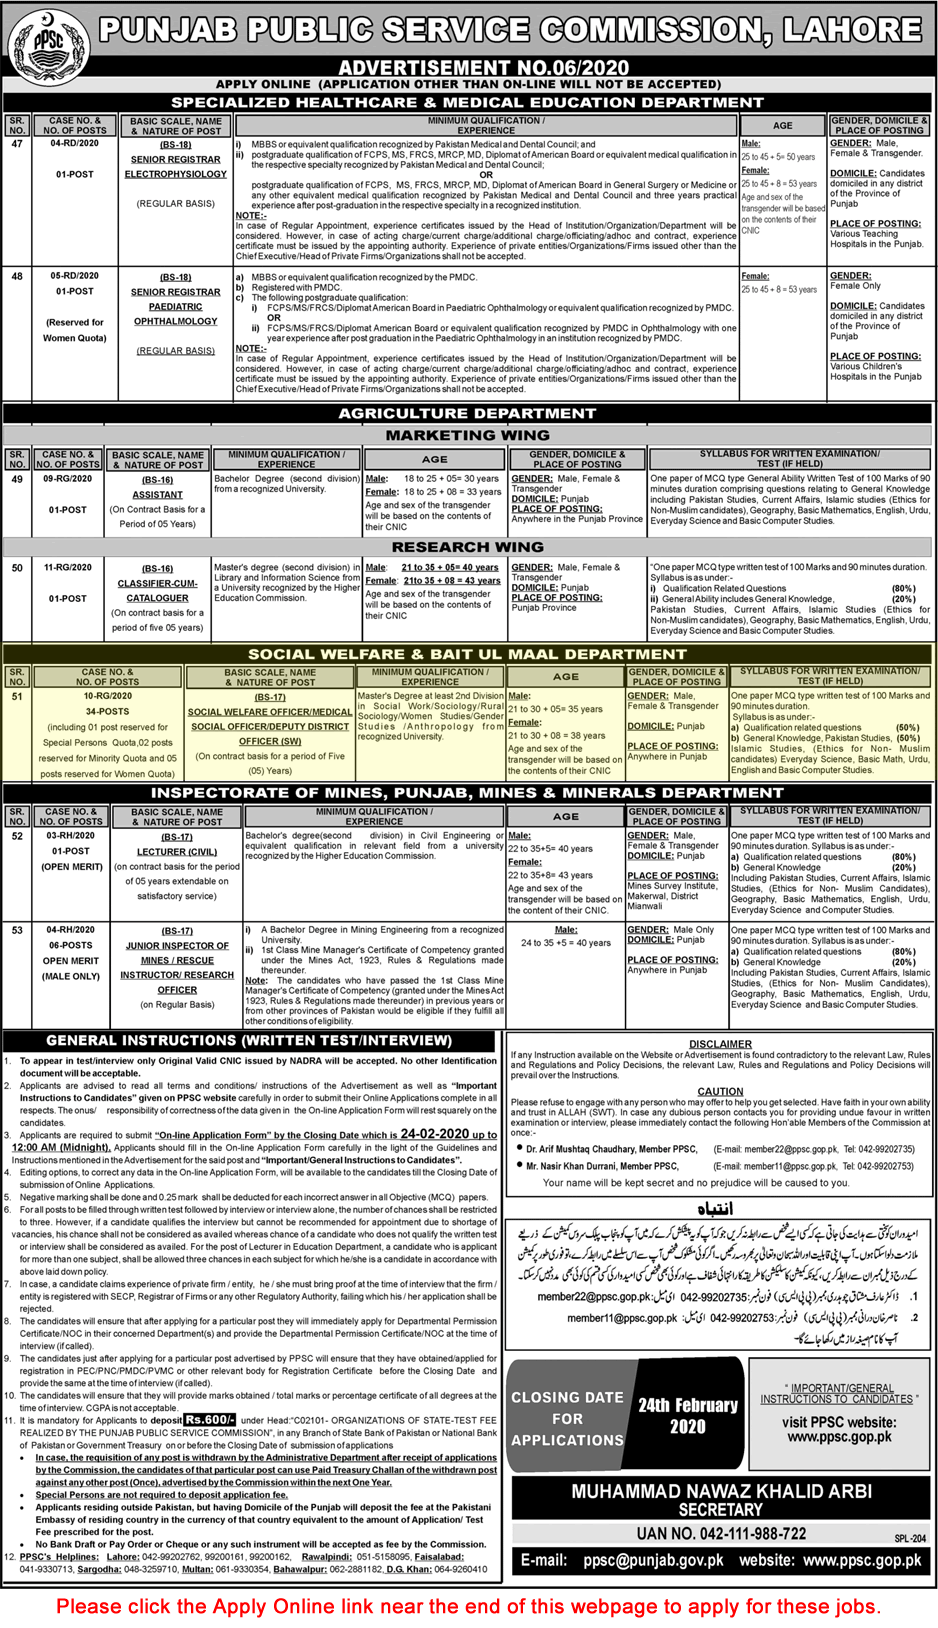 Social Welfare Officer Jobs in Social Welfare & Bait ul Maal Department Punjab 2020 February PPSC Online Apply Latest